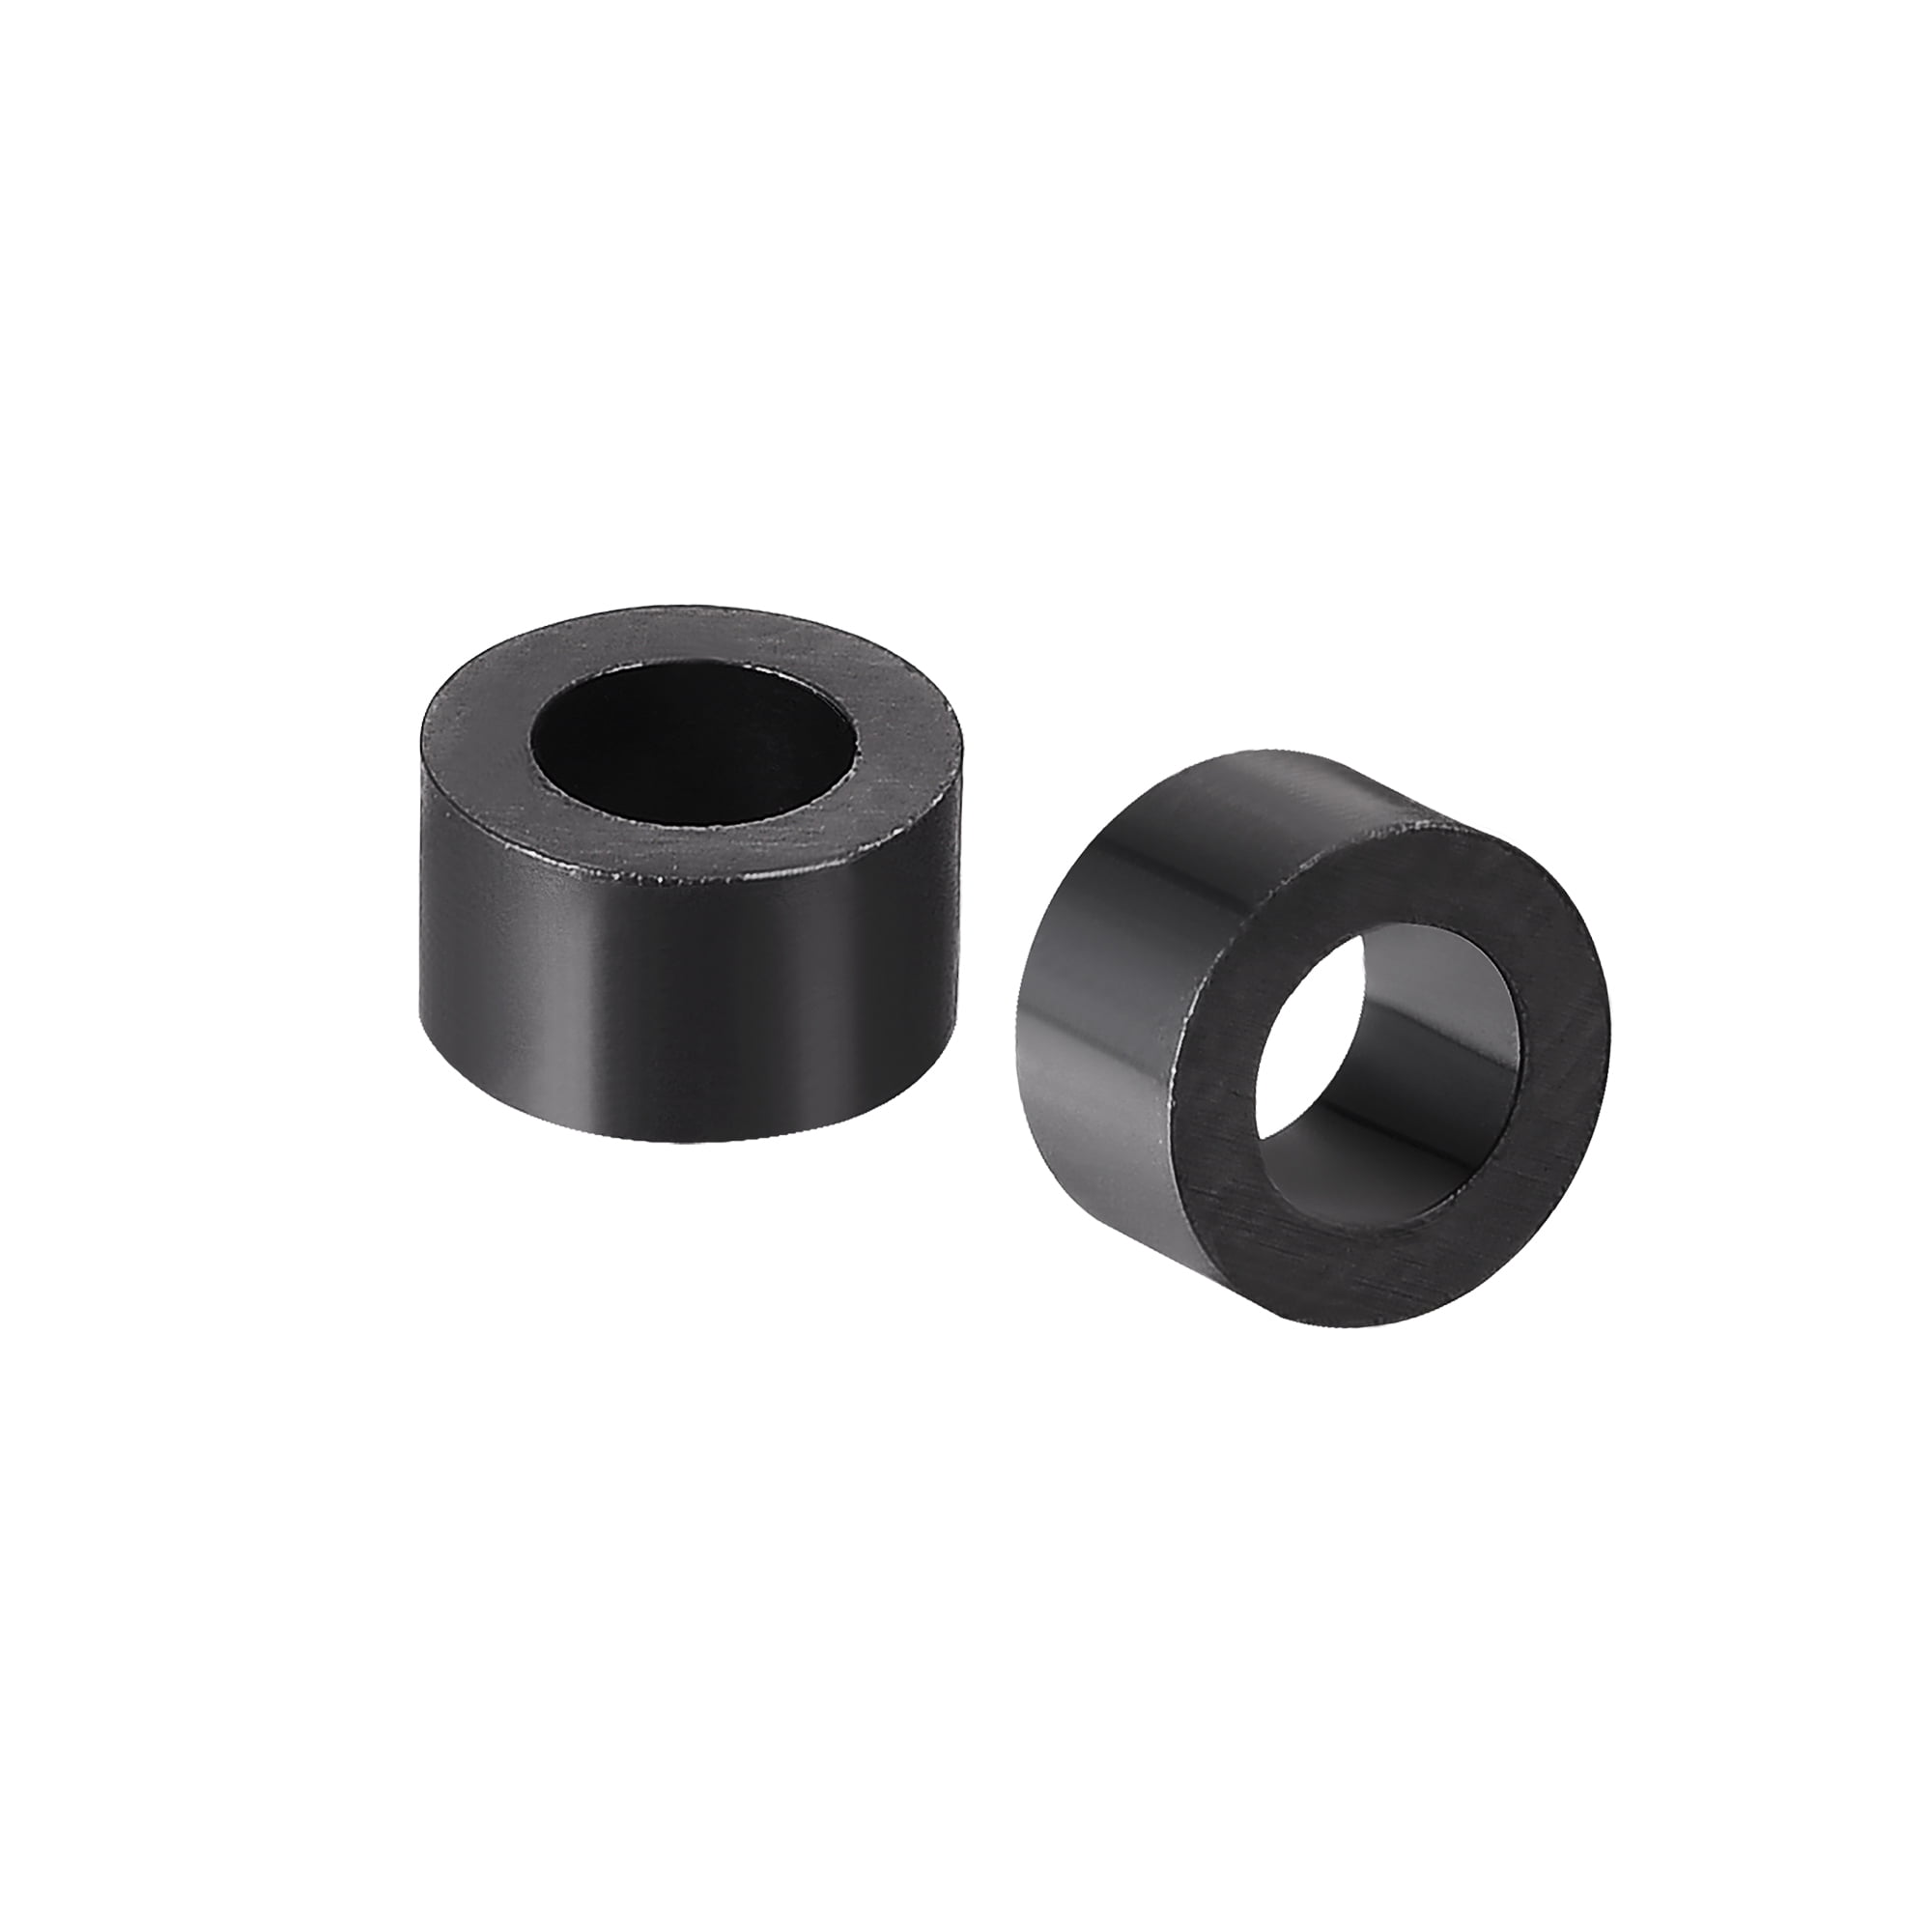 Swpeet 270Pcs 18 Sizes Black Nylon Round Spacer Standoff Screw Nut  Assortment Kit, Nylon ABS Plastic